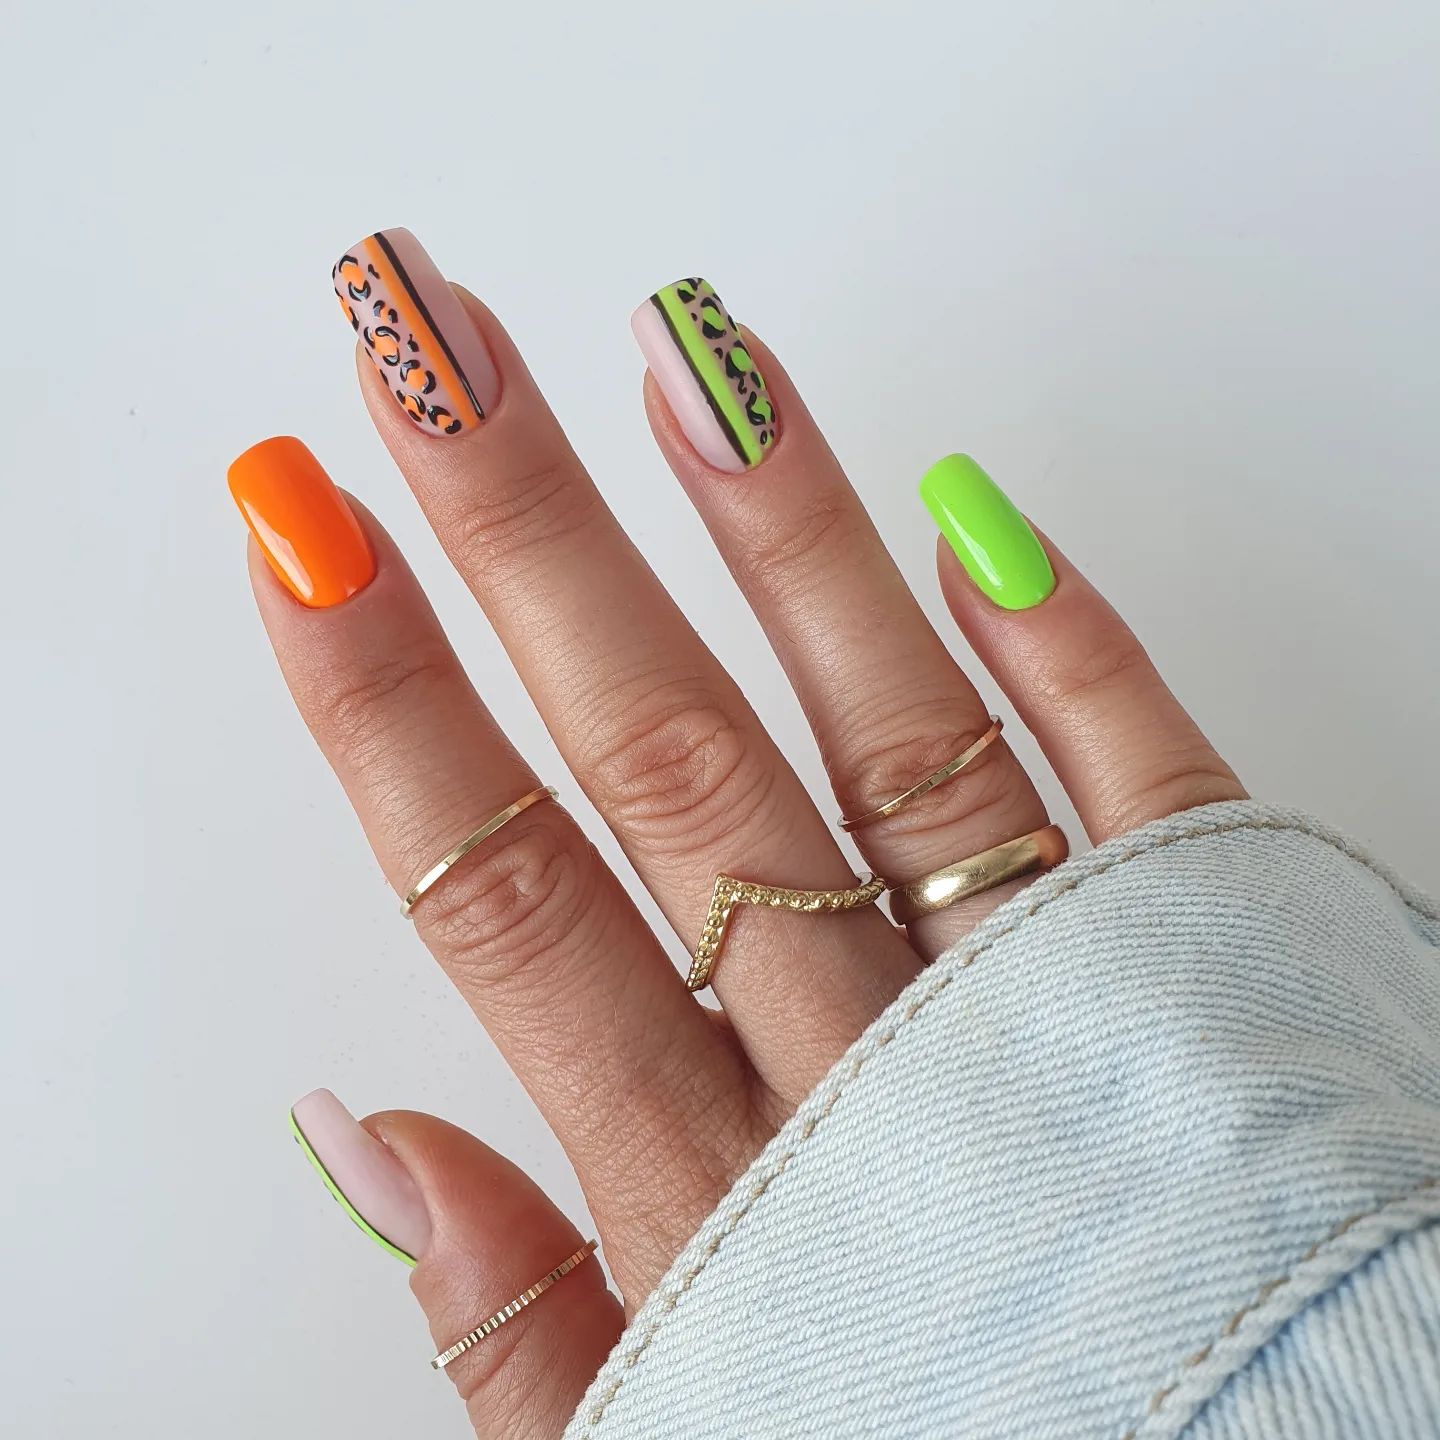 Square Neon Green and Orange Nails